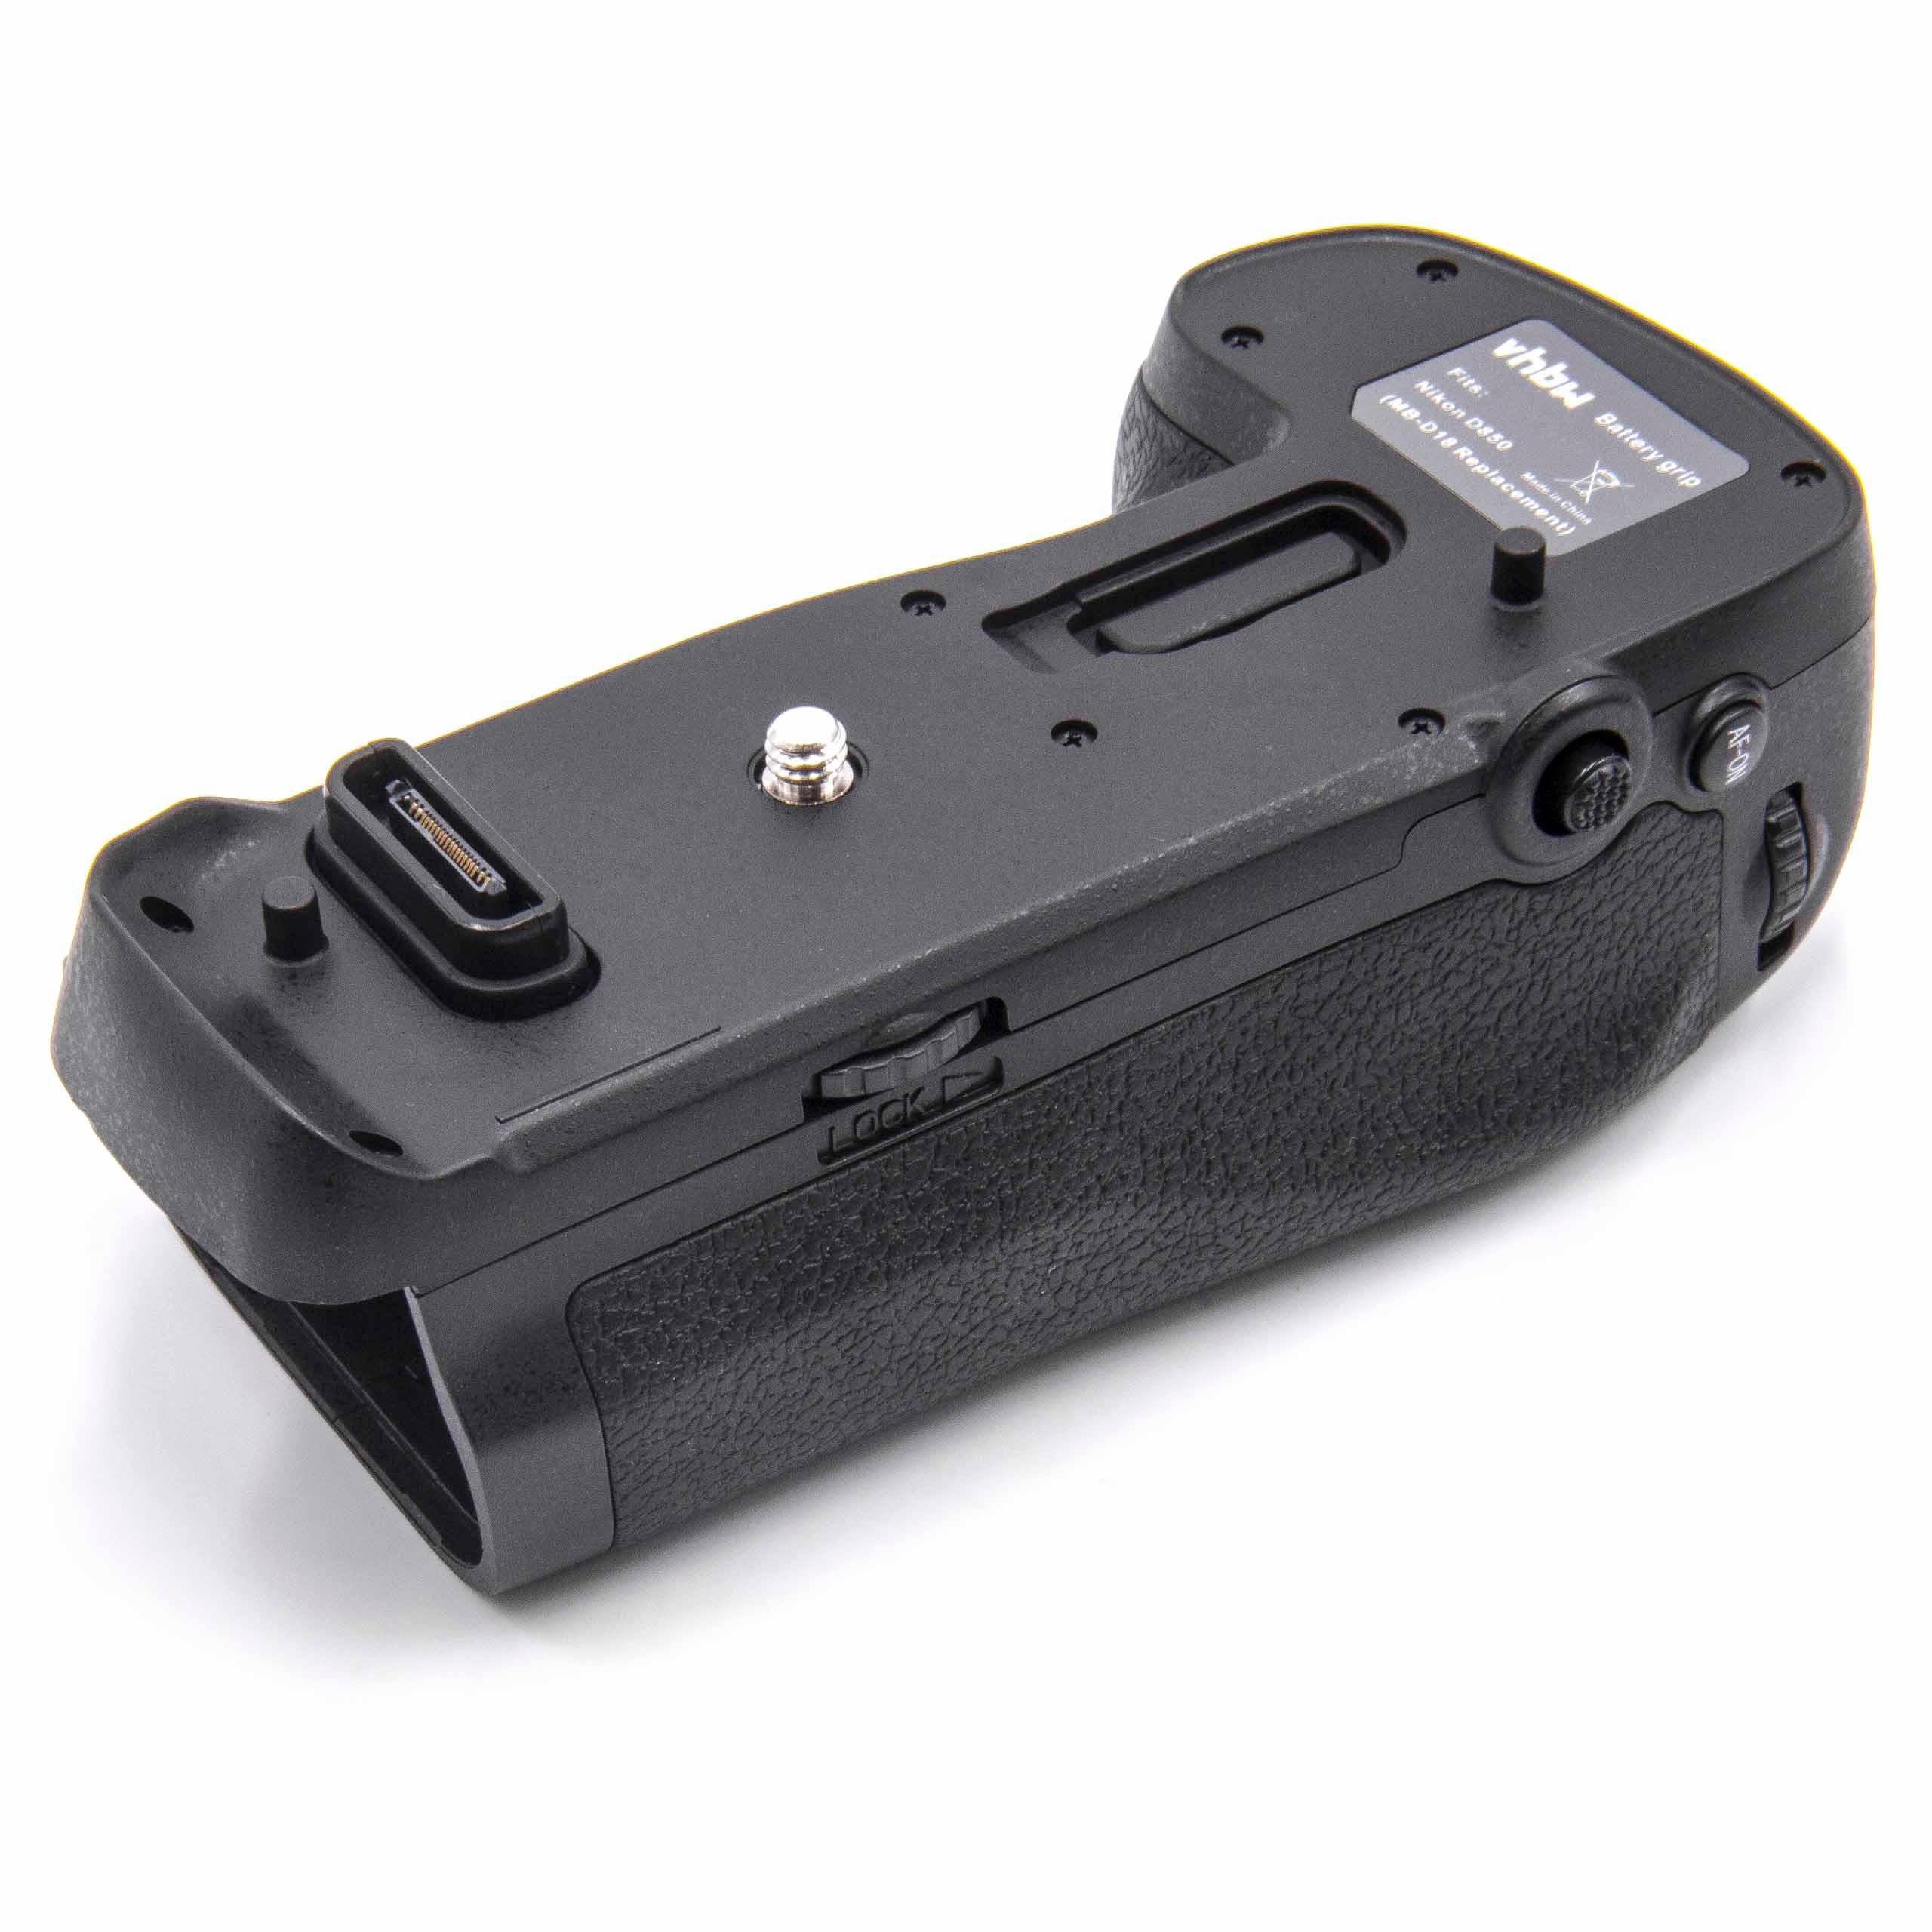 Impugnatura battery grip sostituisce Nikon MB-D18 per camera Nikon - incl. ghiera 